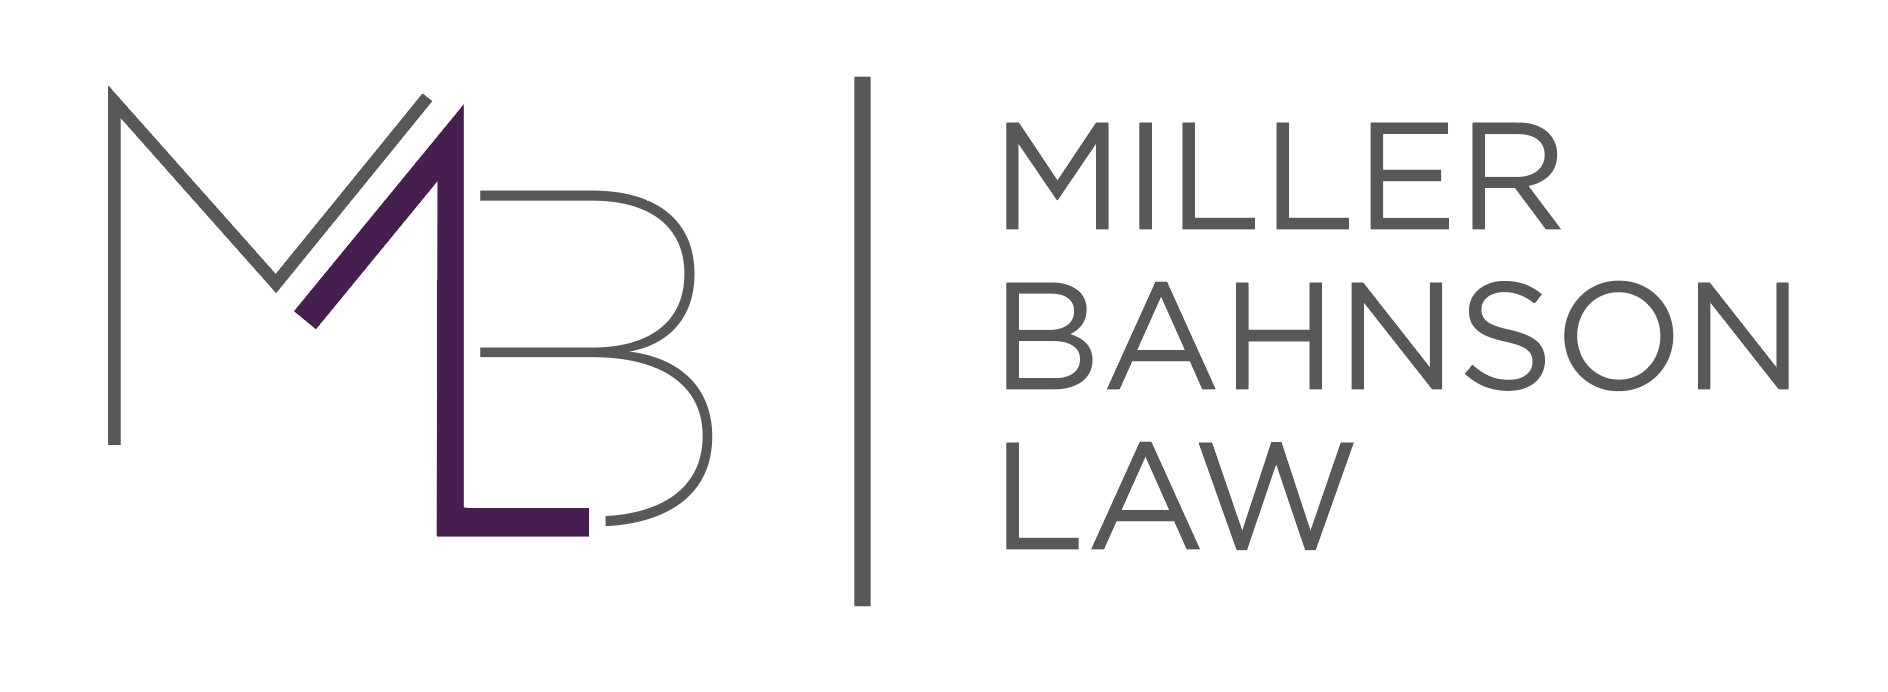 Miller Bahnson Law